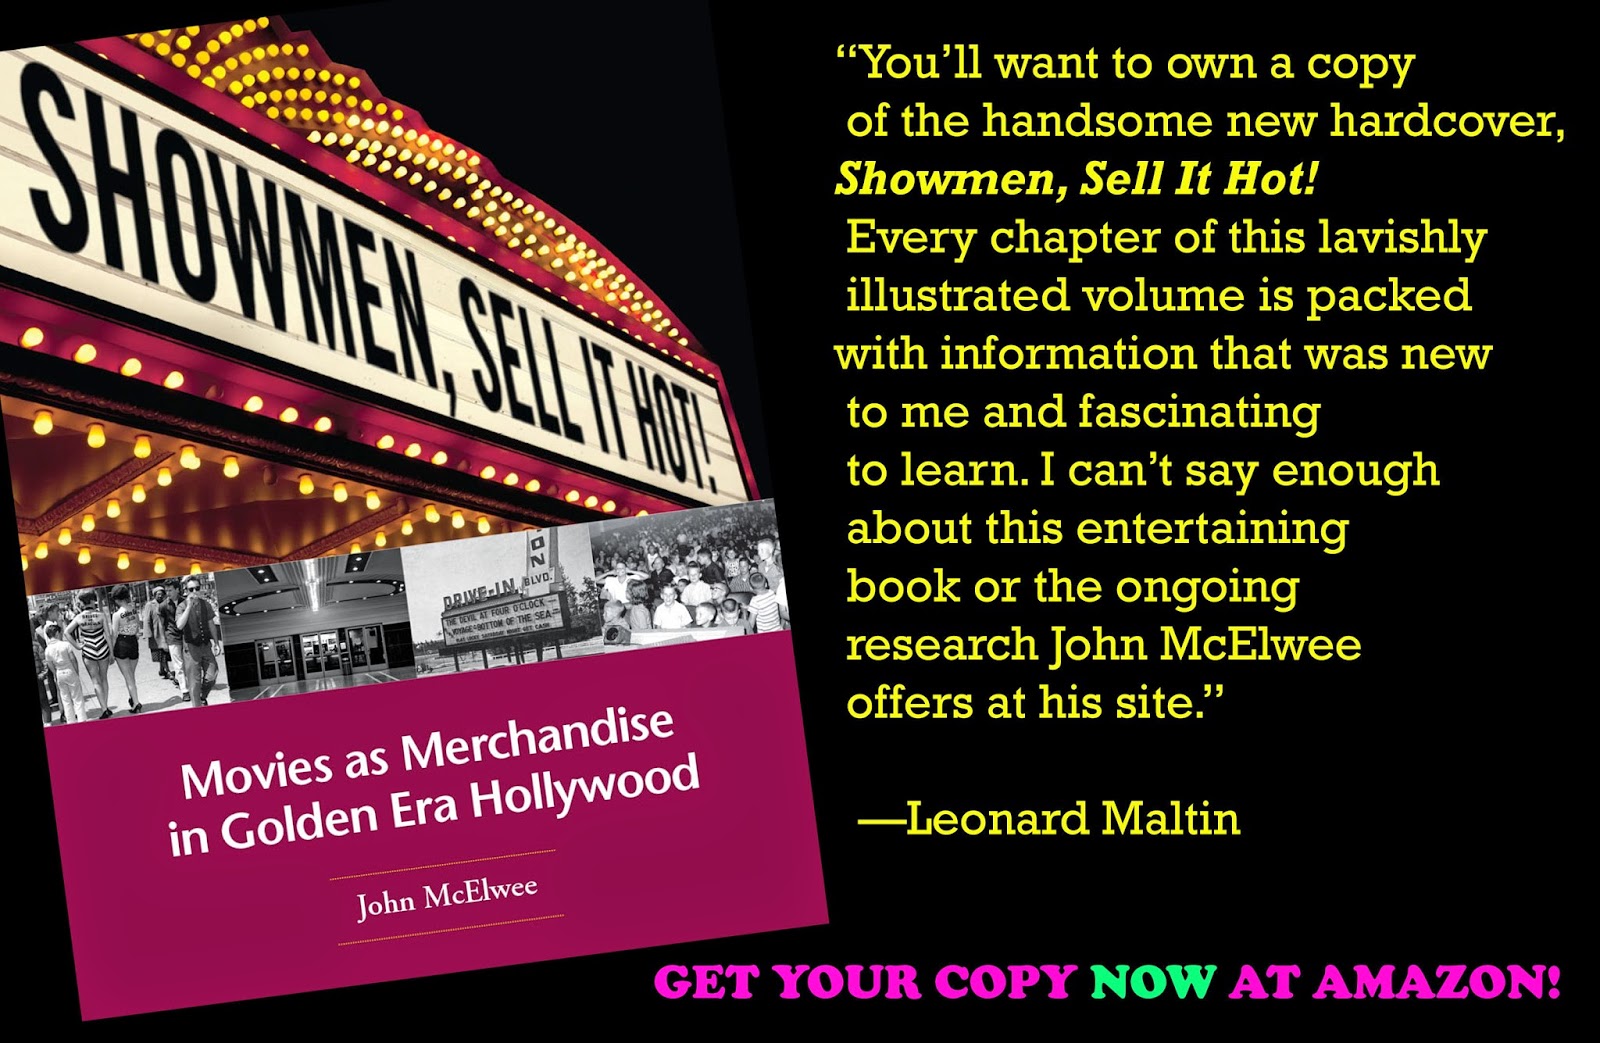 http://www.amazon.com/Showmen-Sell-Hot-Merchandise-Hollywood/dp/0971168598/ref=sr_1_1?s=books&ie=UTF8&qid=1404298751&sr=1-1&keywords=showmen+sell+it+hot